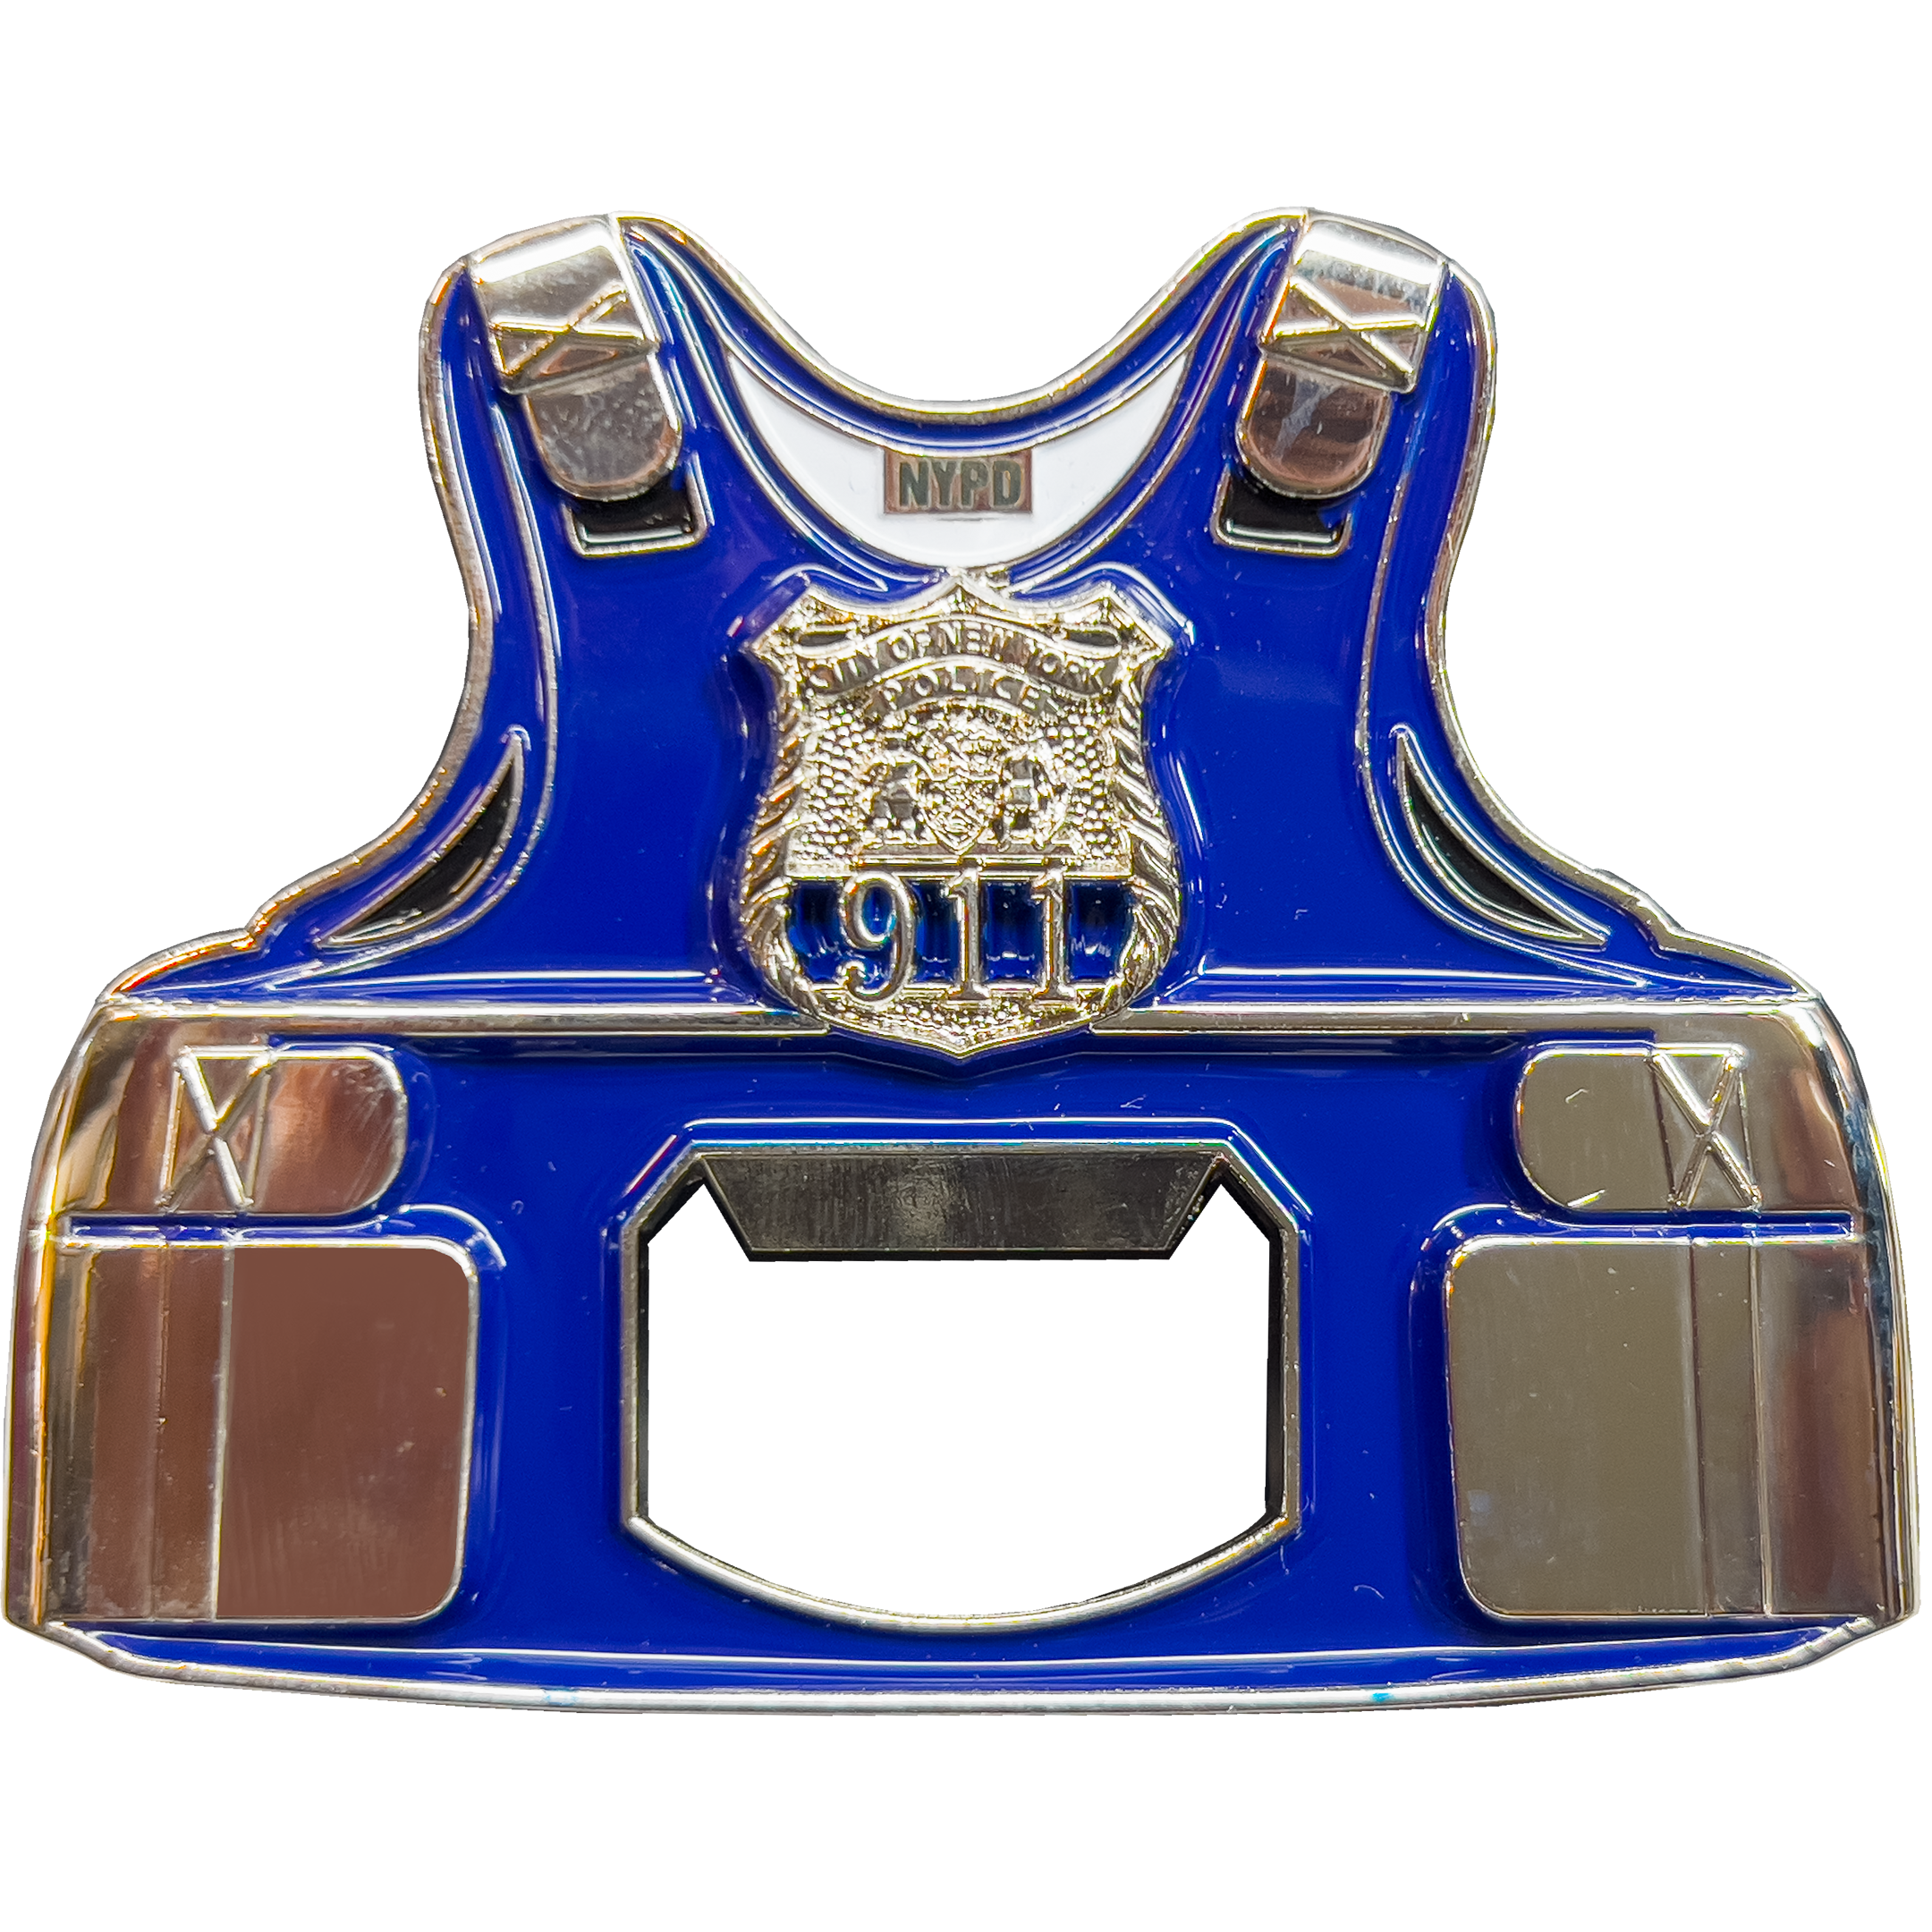 GL09-001 NYPD New York City Police Officer Bottle Opener Challenge Coin